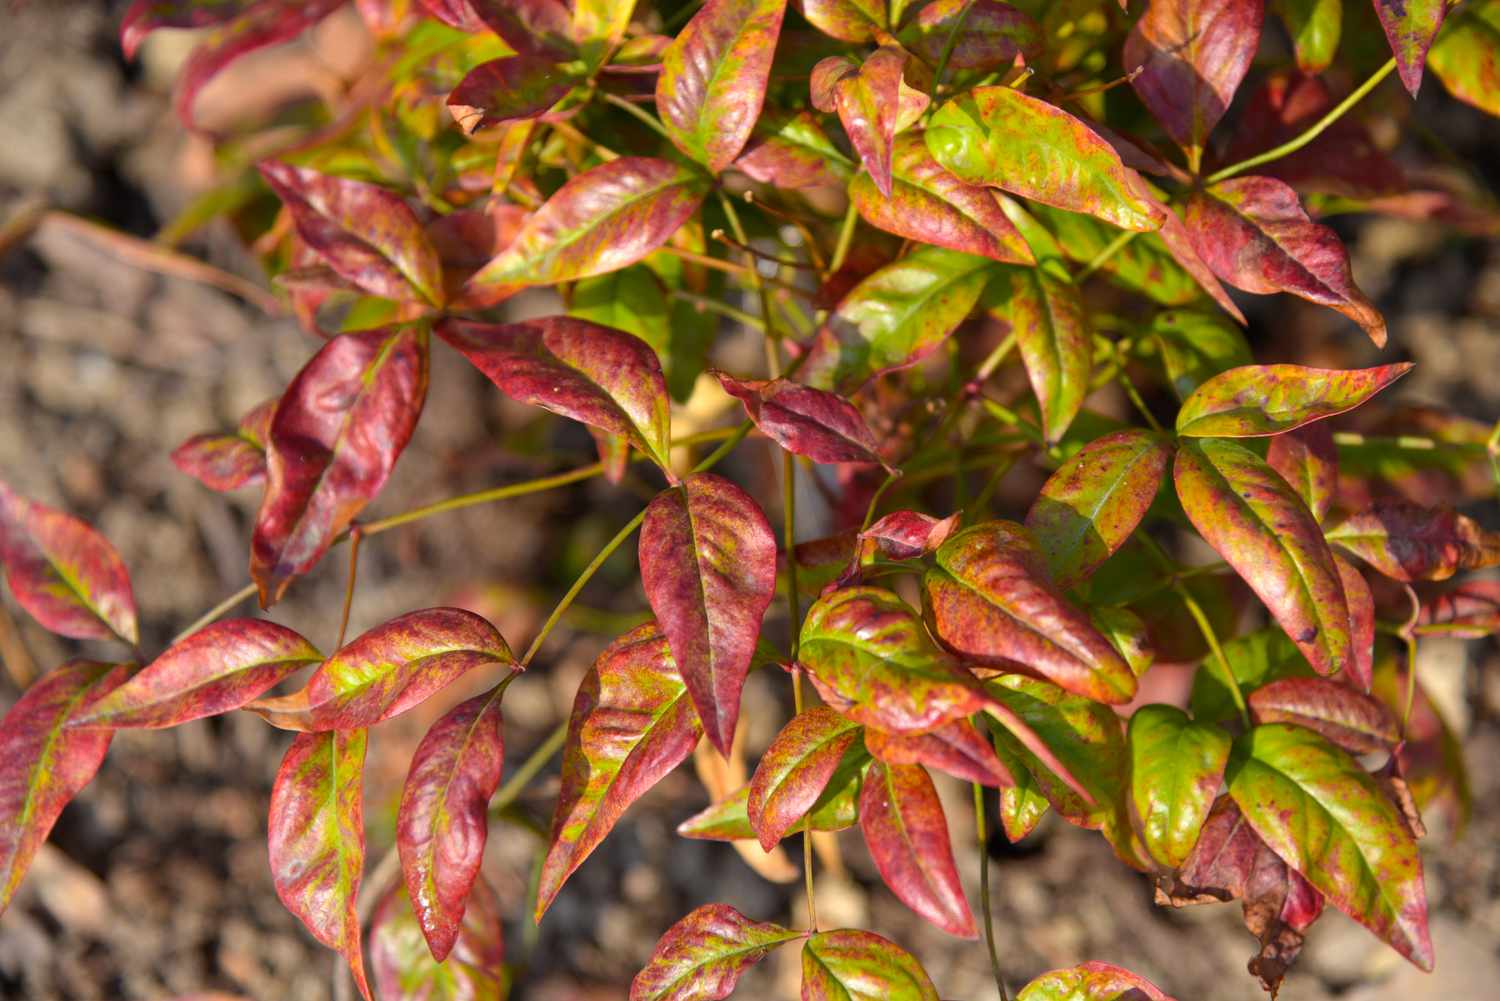 Firepower Nandina Pflanze mit roten und grünen Blättern an dünnen Stängeln in Nahaufnahme